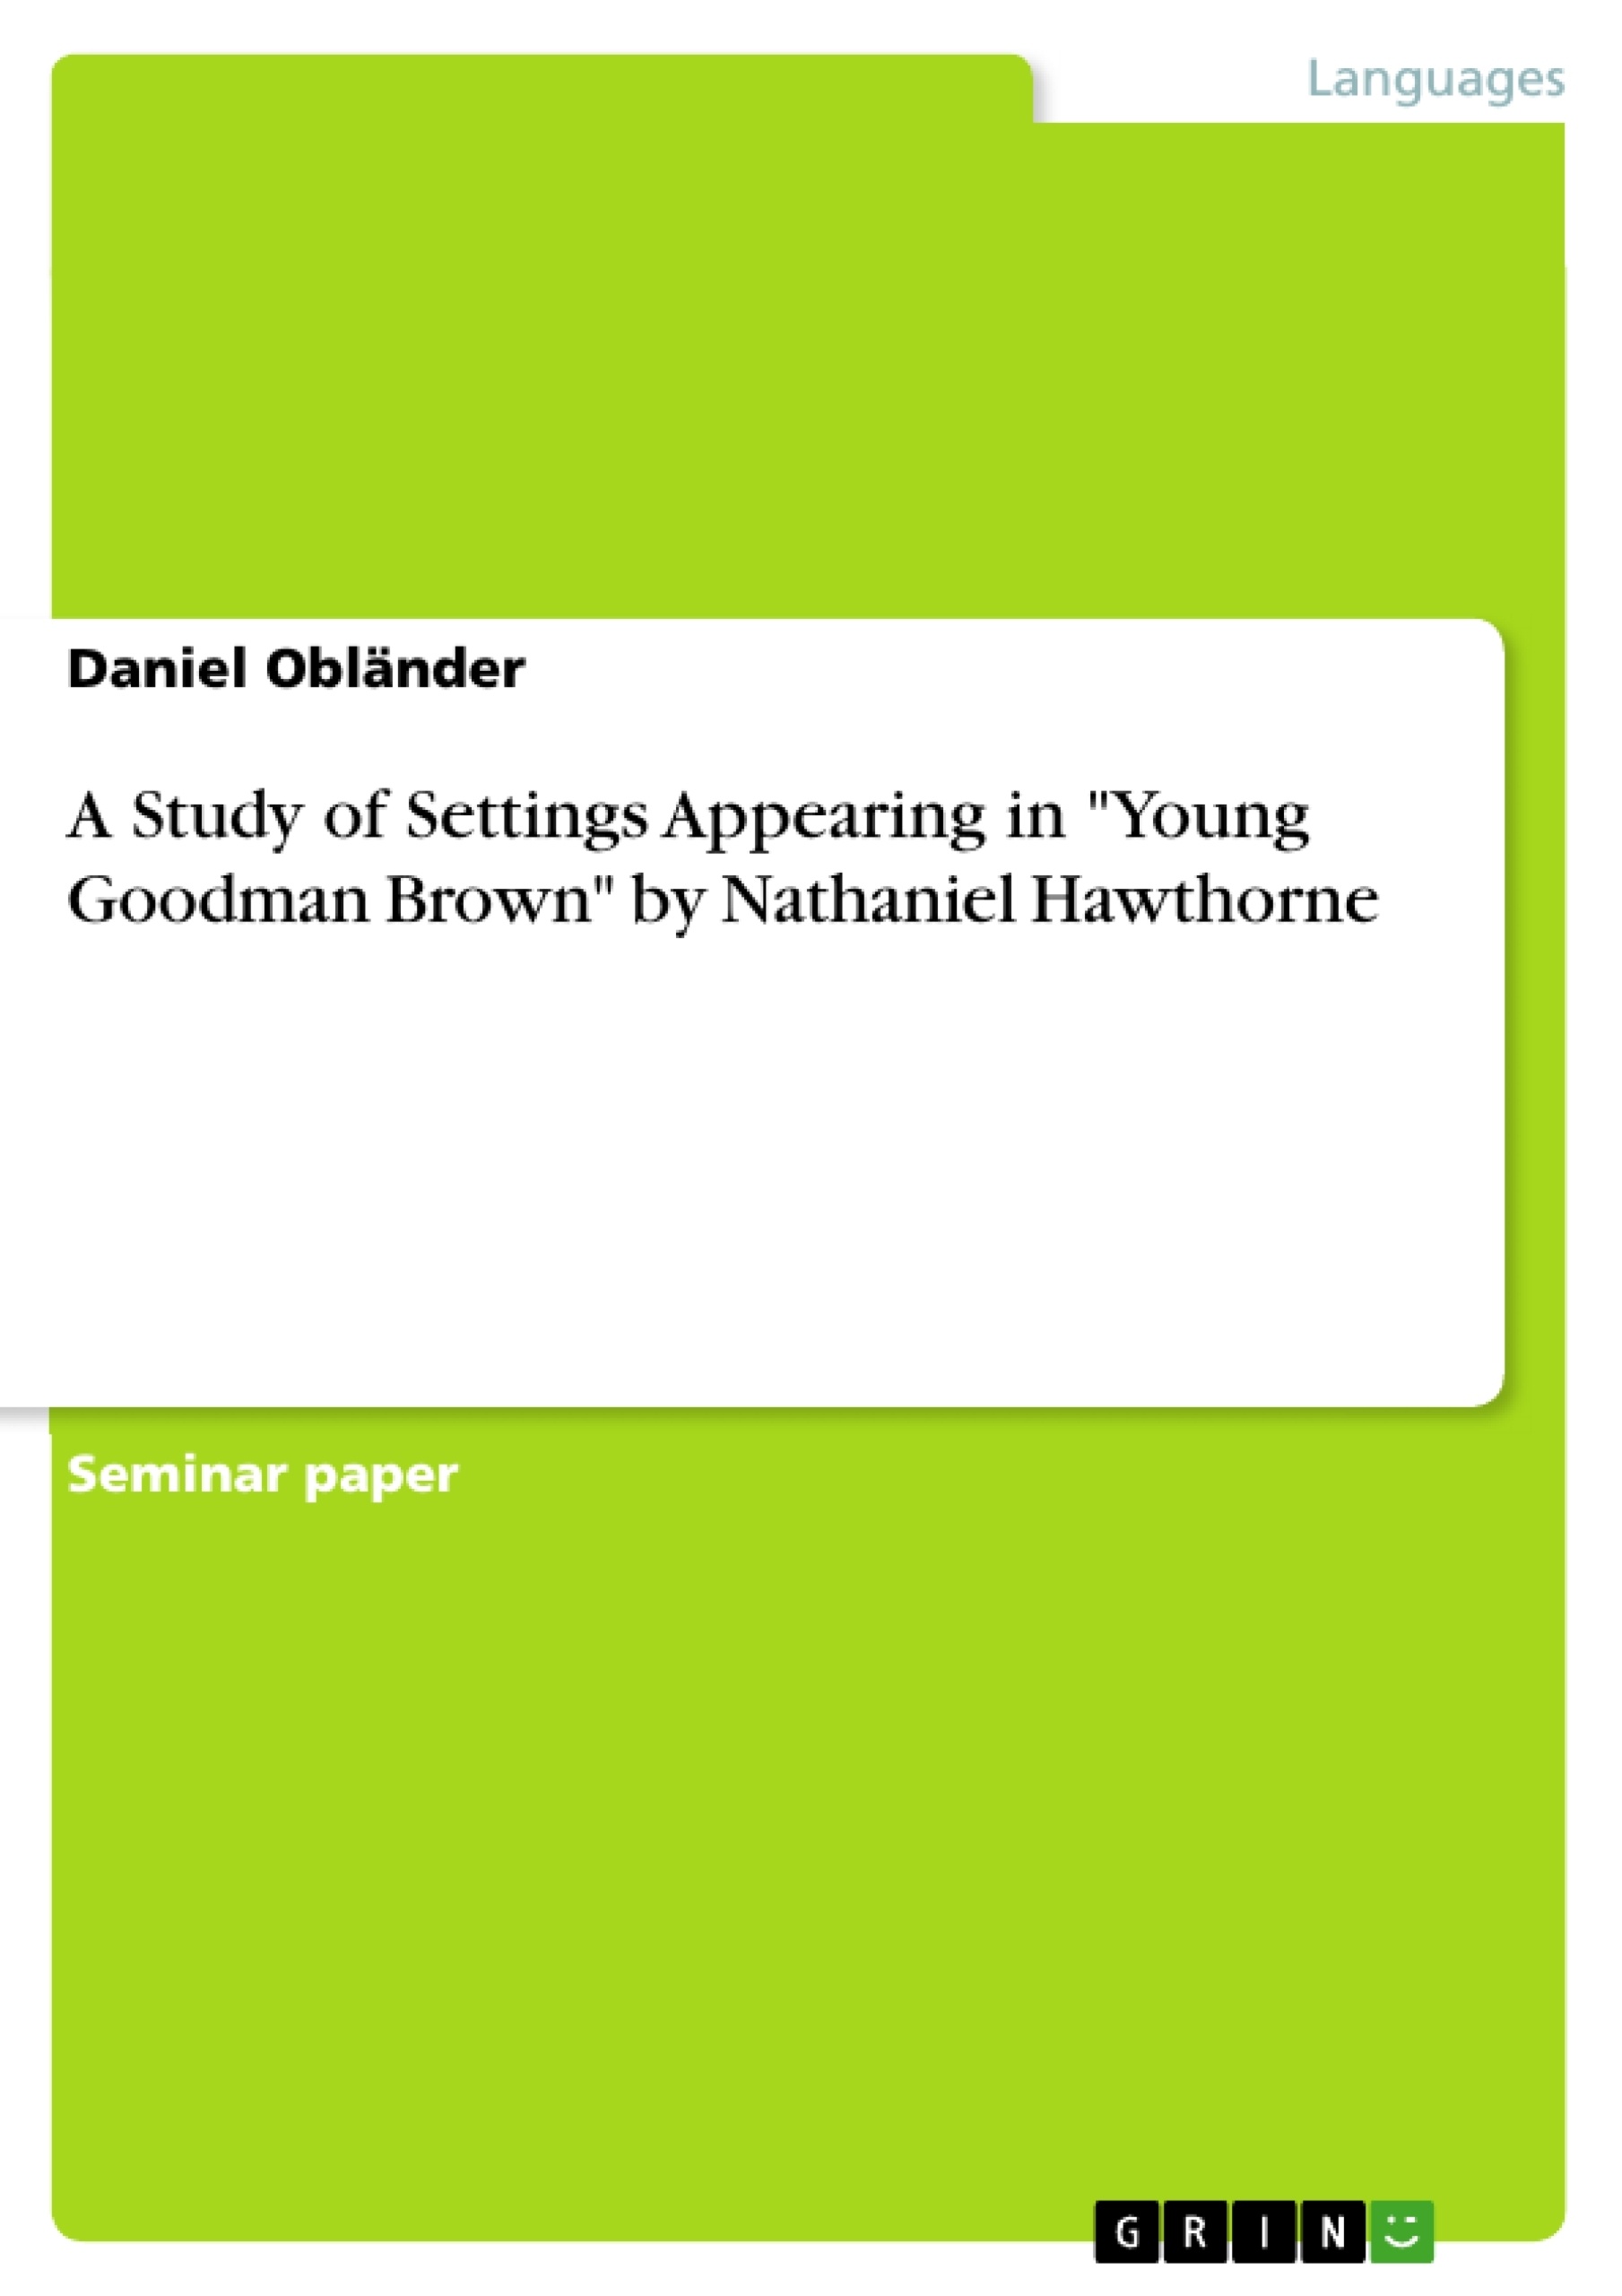 Young goodman brown nathaniel hawthorne analysis report